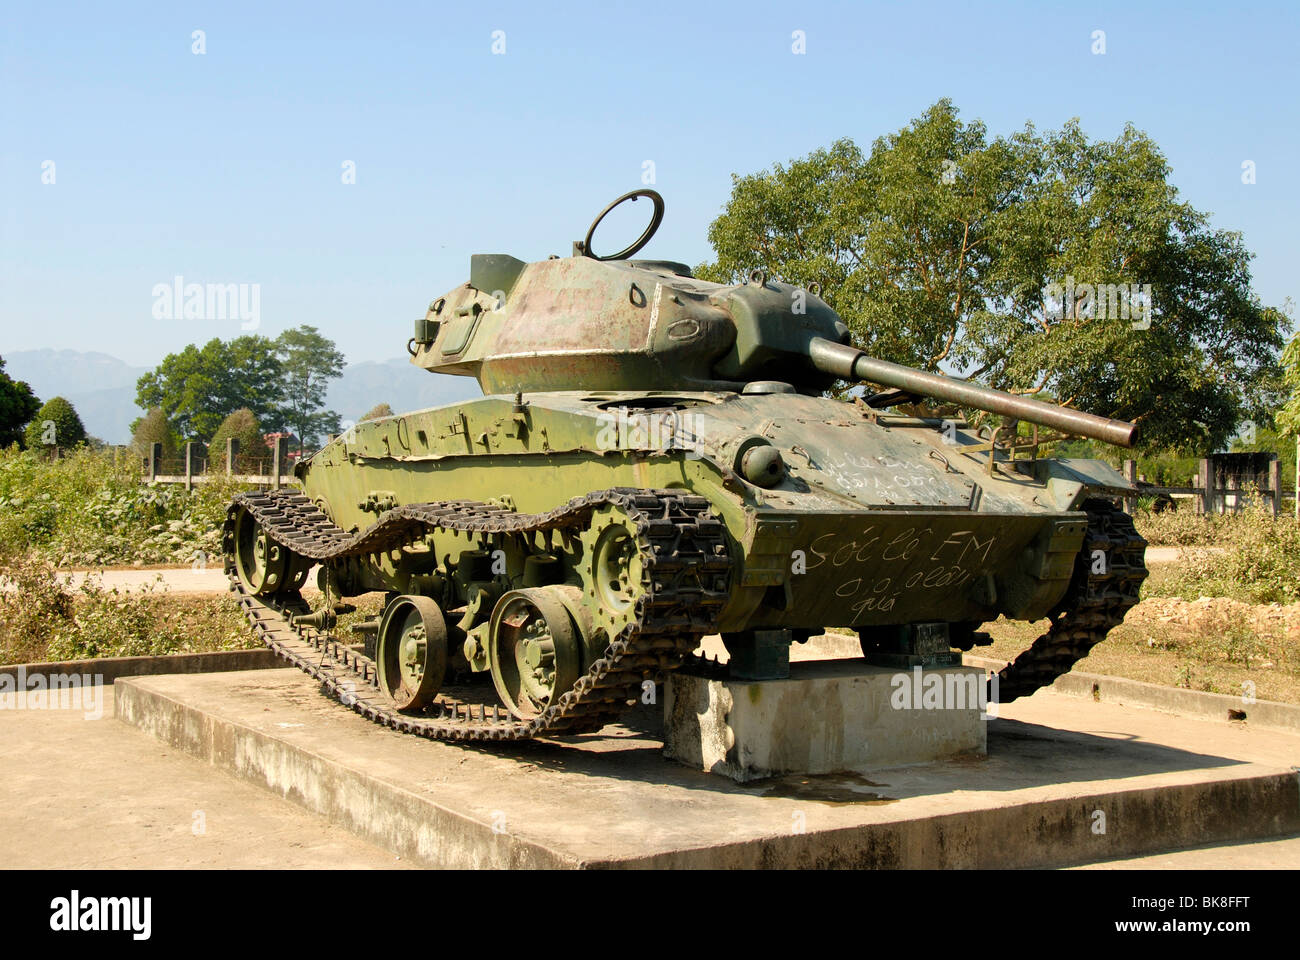 First Indochina War 1954, French tank, Dien Bien Phu, Vietnam, Southeast Asia, Asia Stock Photo